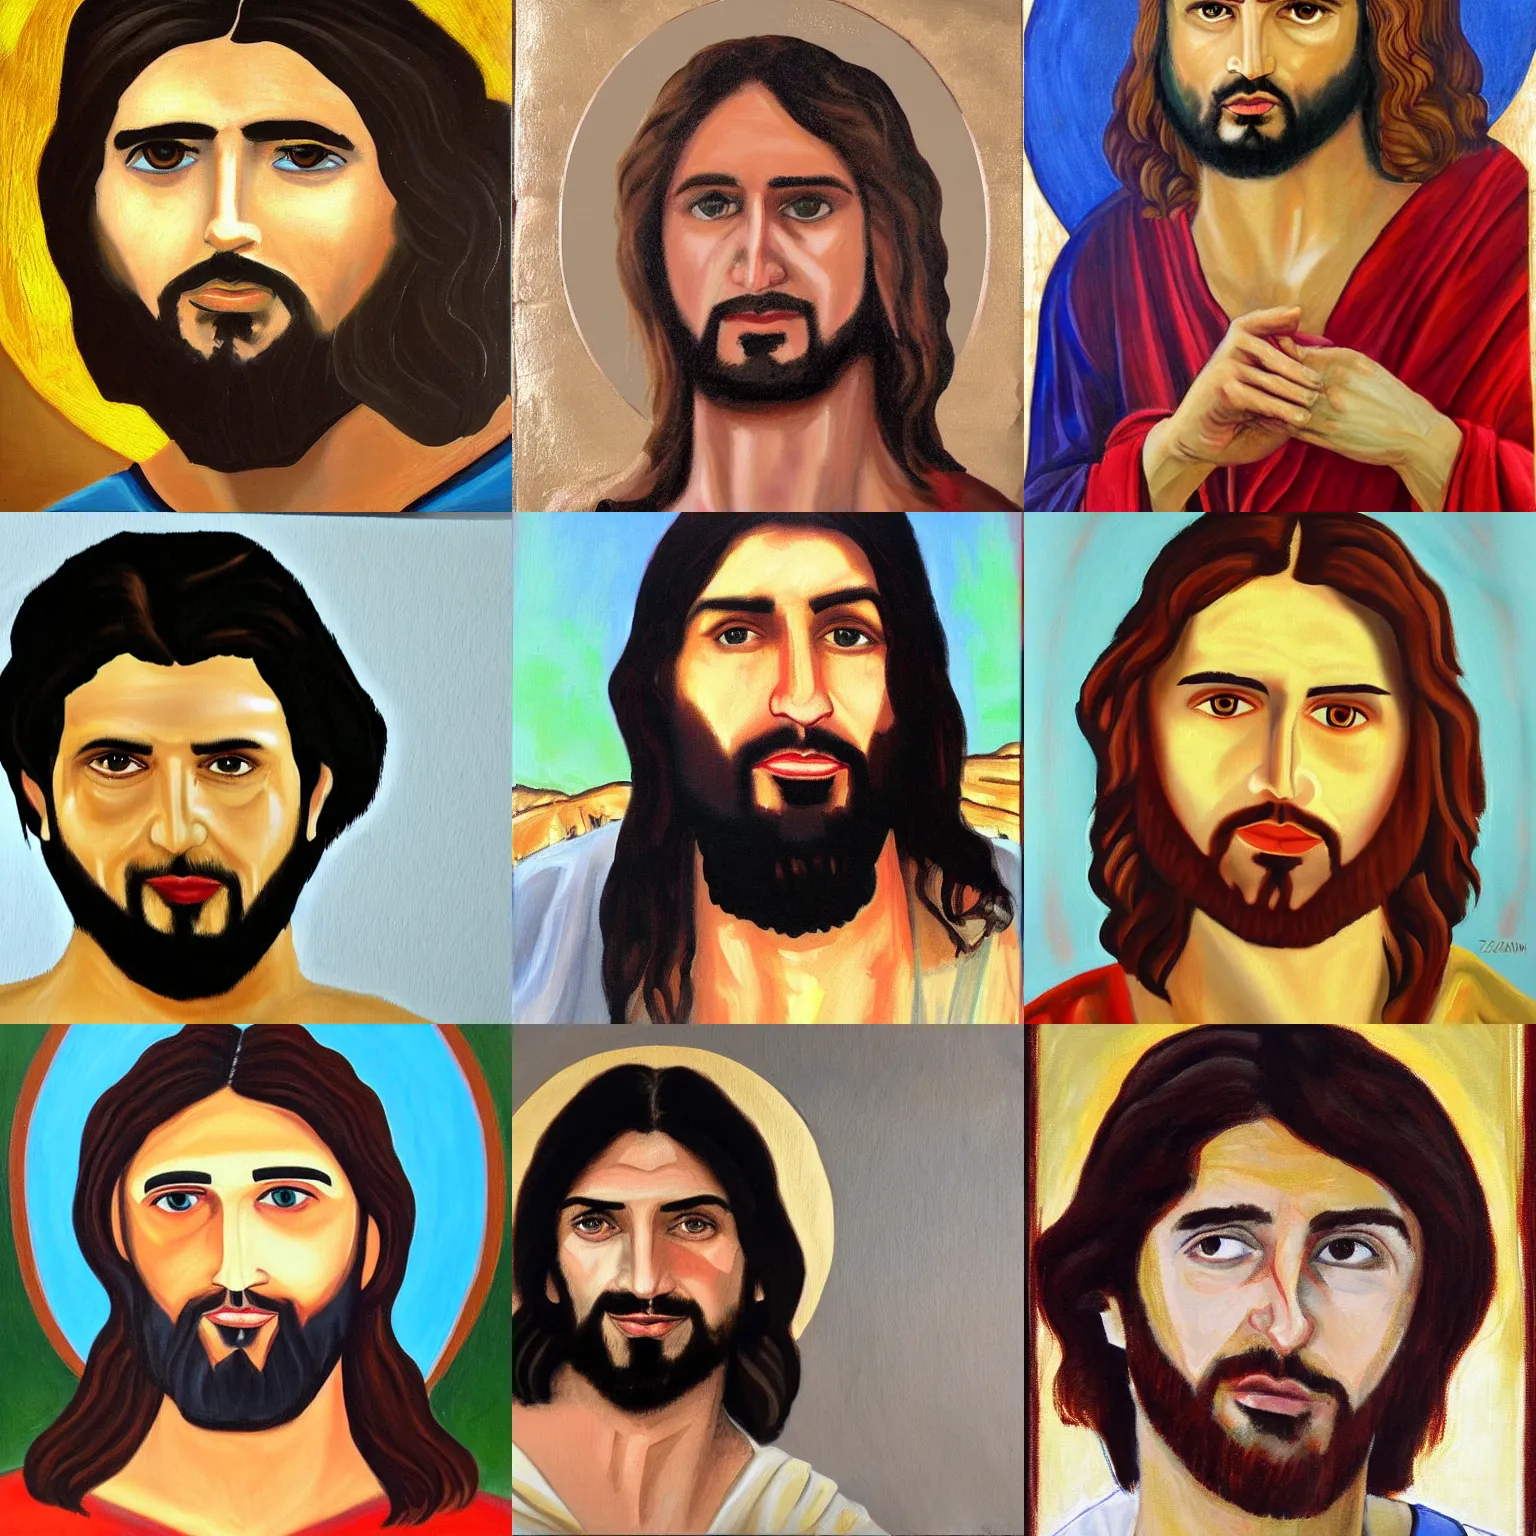 Prompt: painting of zoran milanovic posing as jesus, realistic